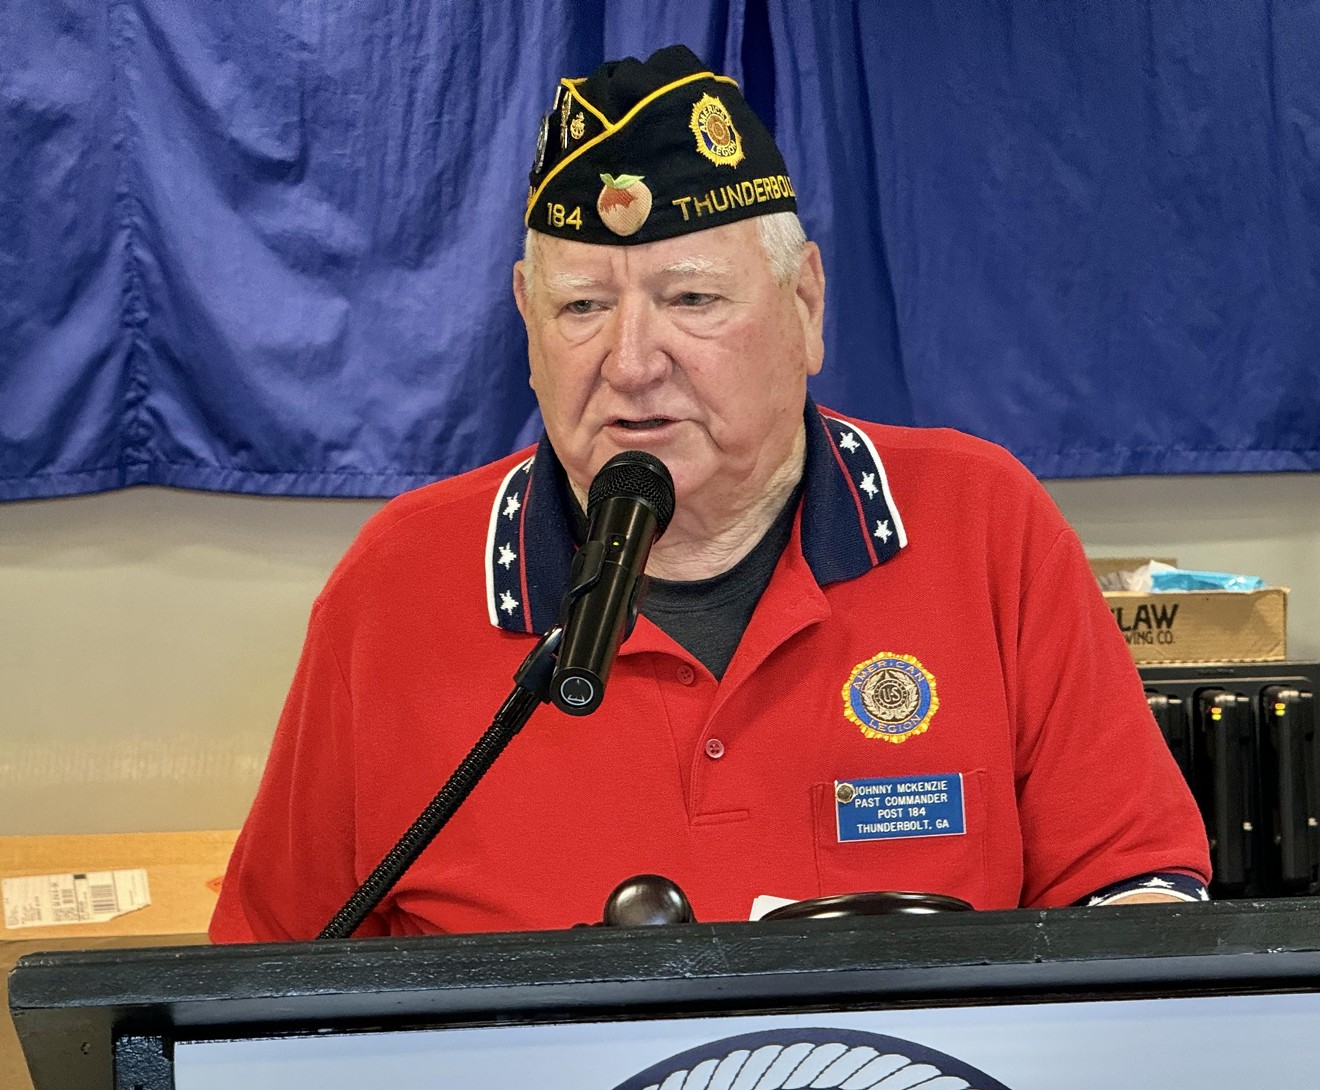 Veterans Council of Chatham County May Meeting